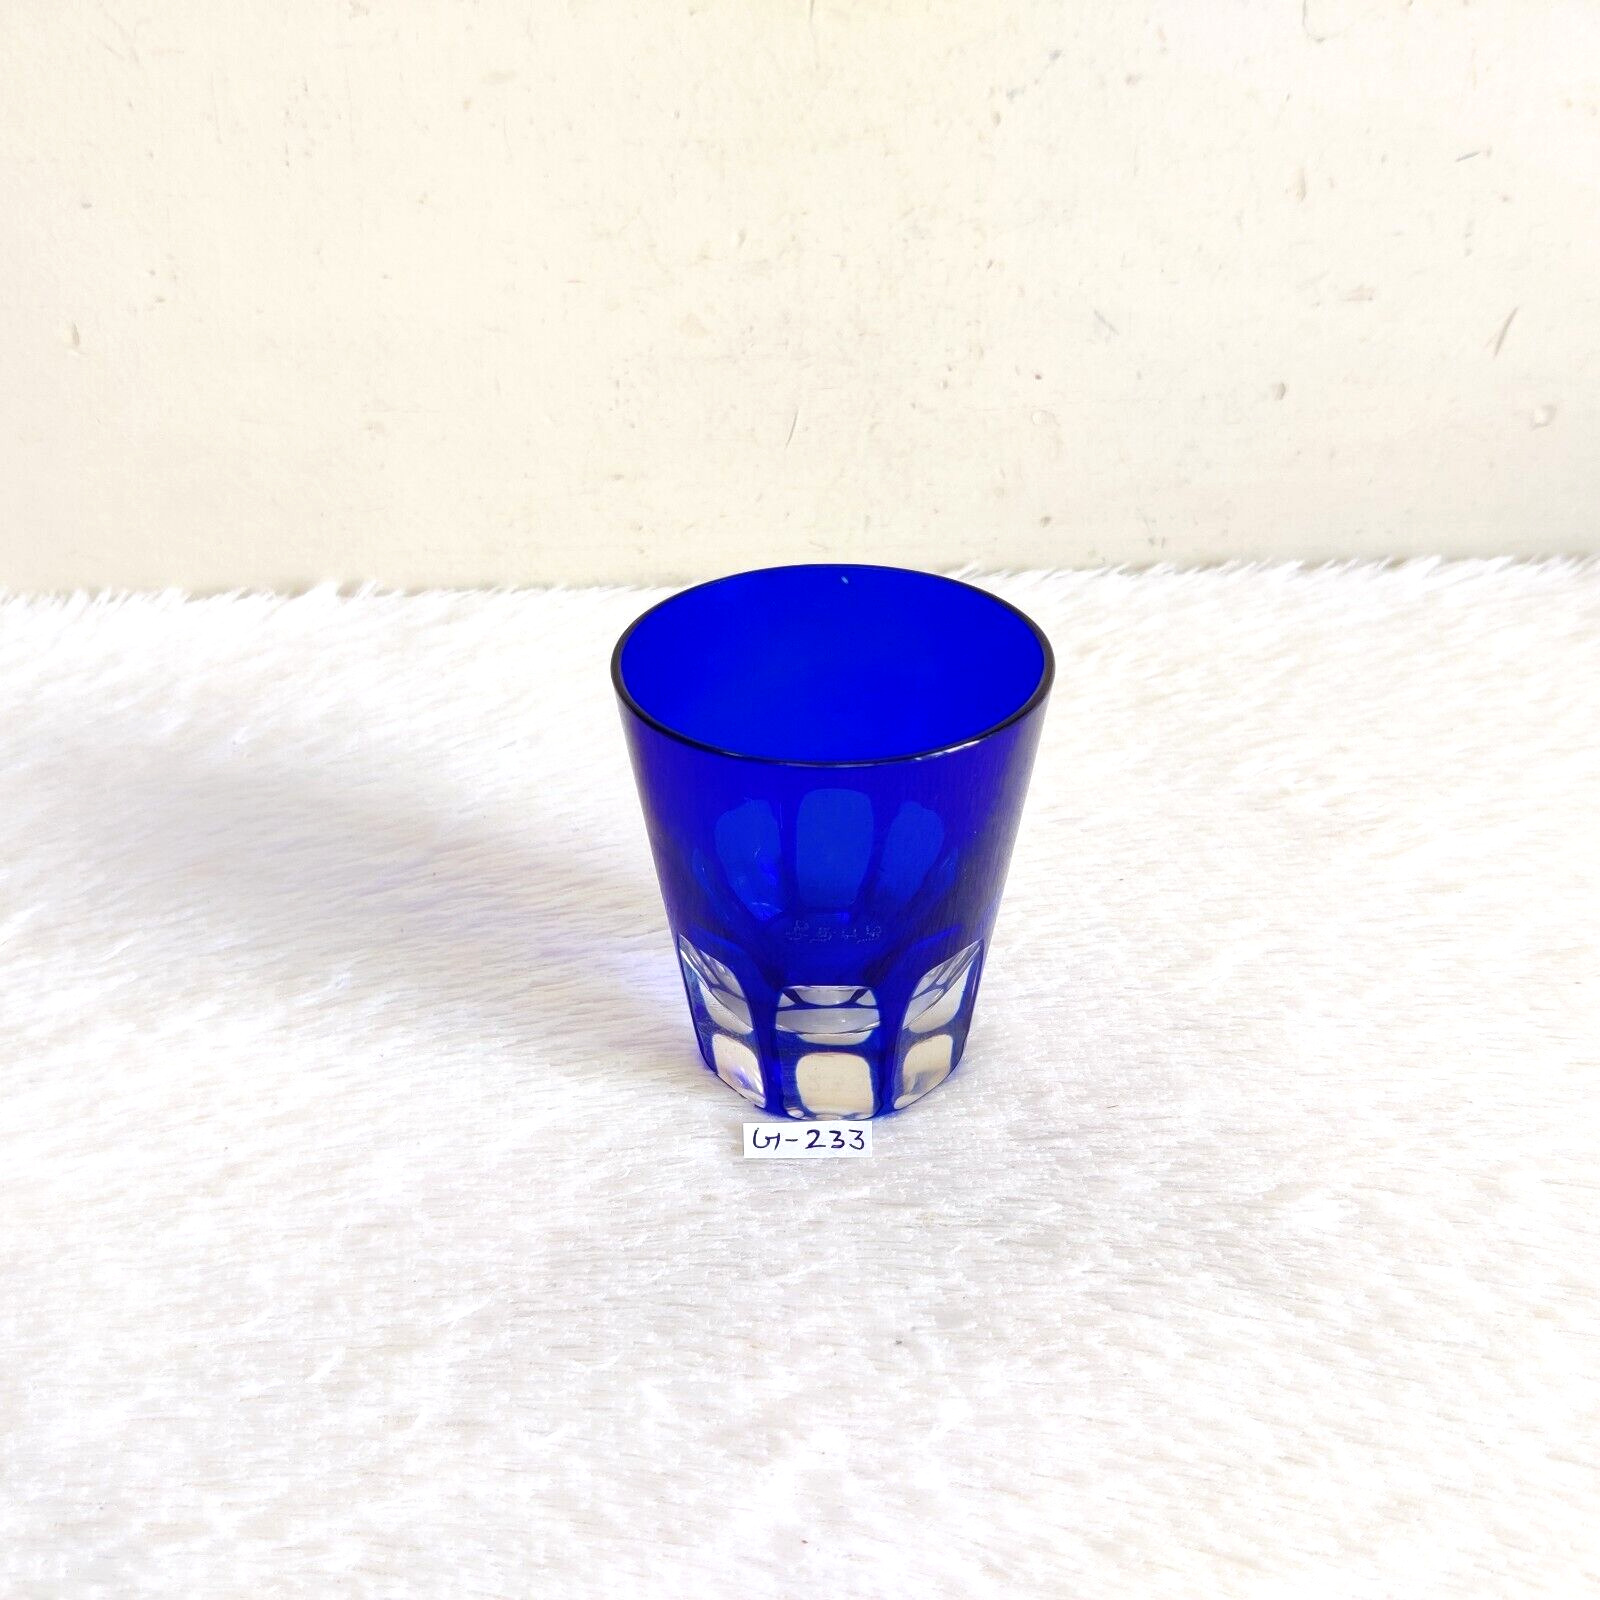 Vintage Cobalt Blue Glass Tumbler Barware Collectible Rare Decorative GT227